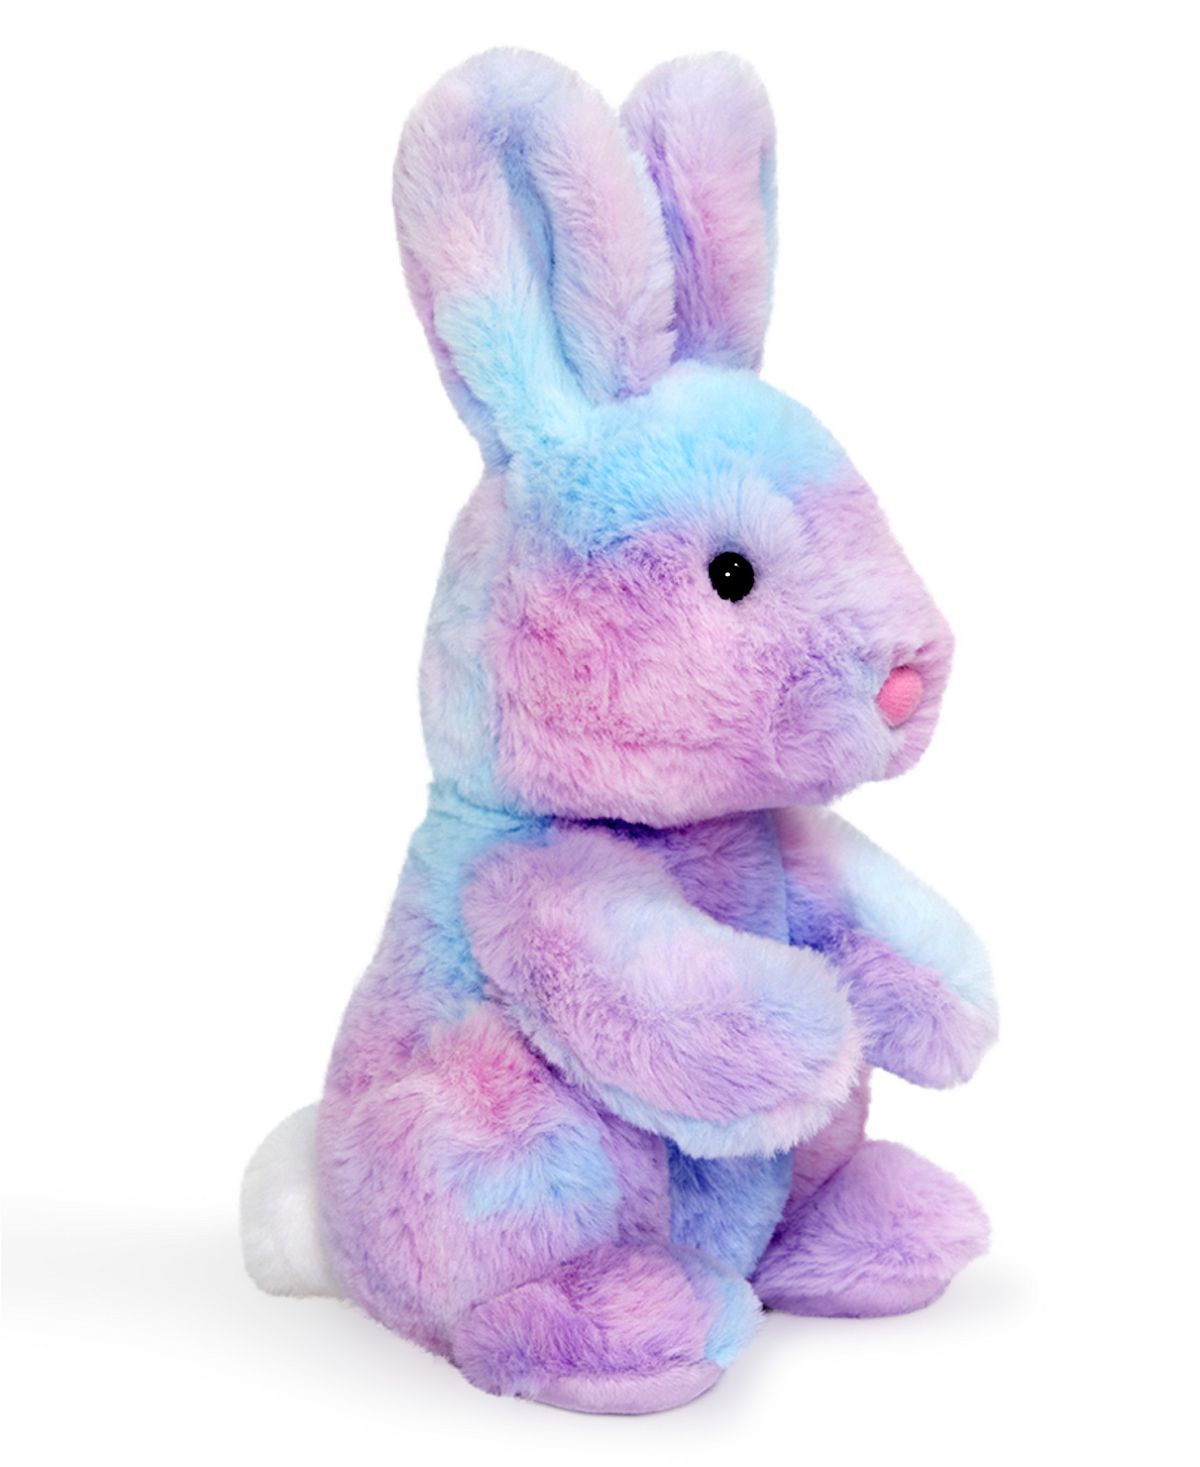 Geoffrey's Toy Box 9-Inch Tie Dye Bunny Plush - Colorful and Cuddly